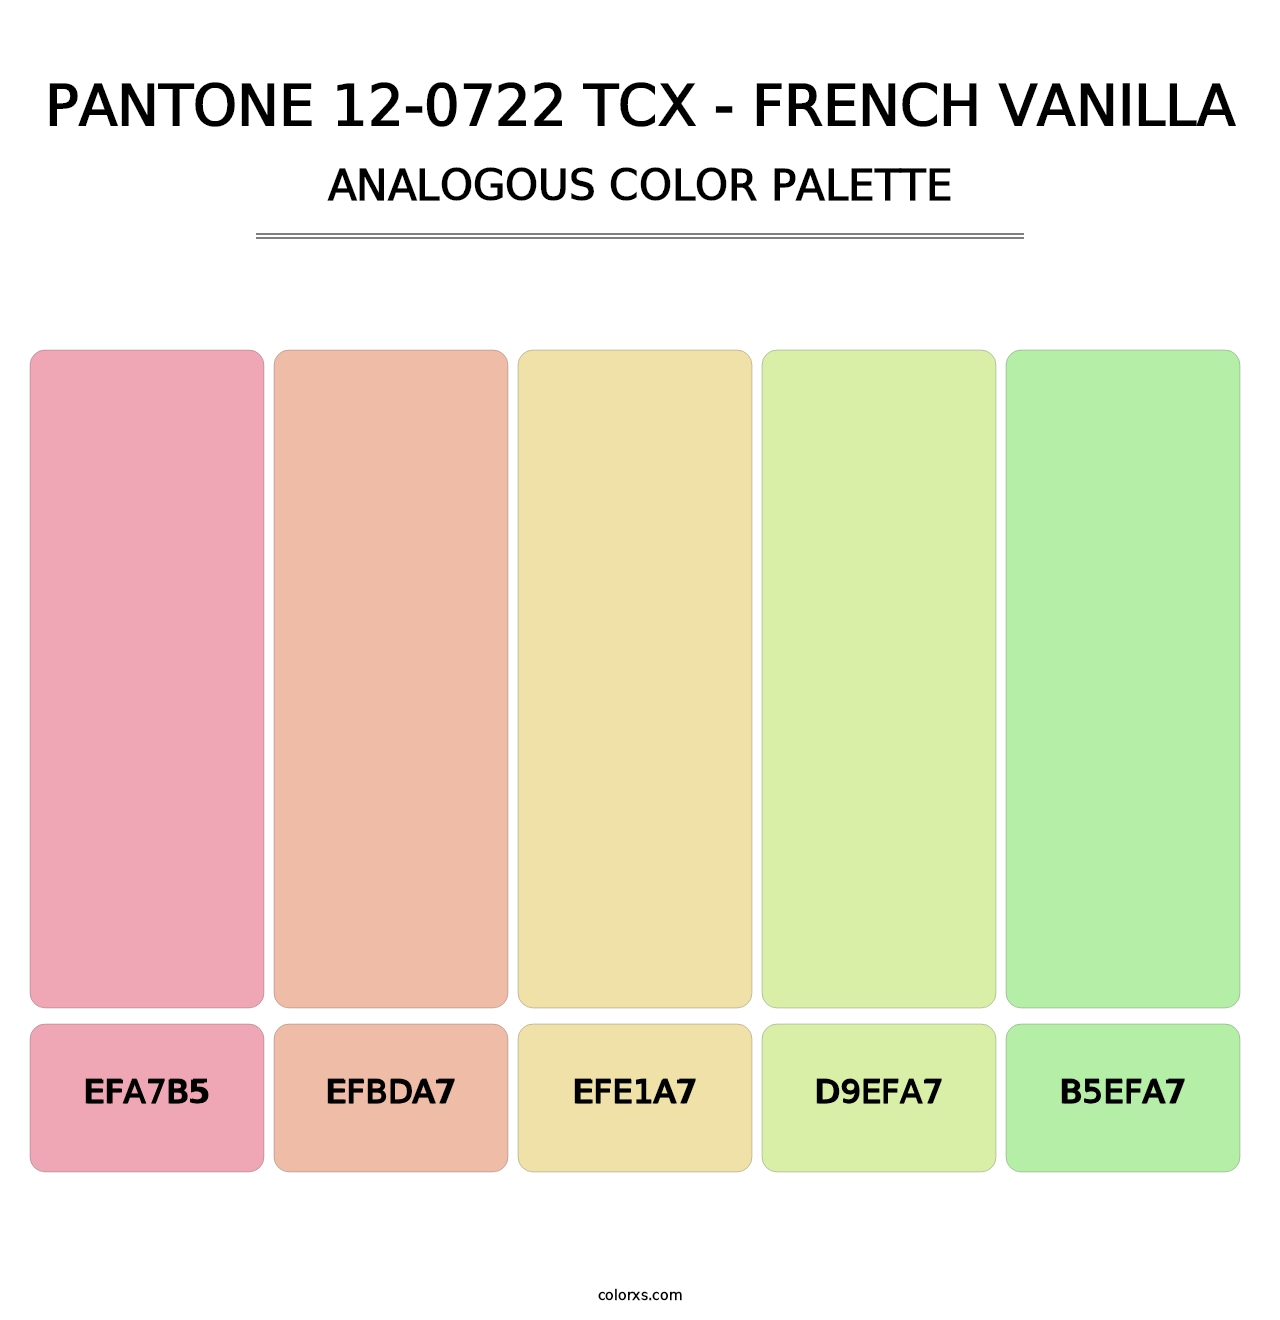 PANTONE 12-0722 TCX - French Vanilla - Analogous Color Palette